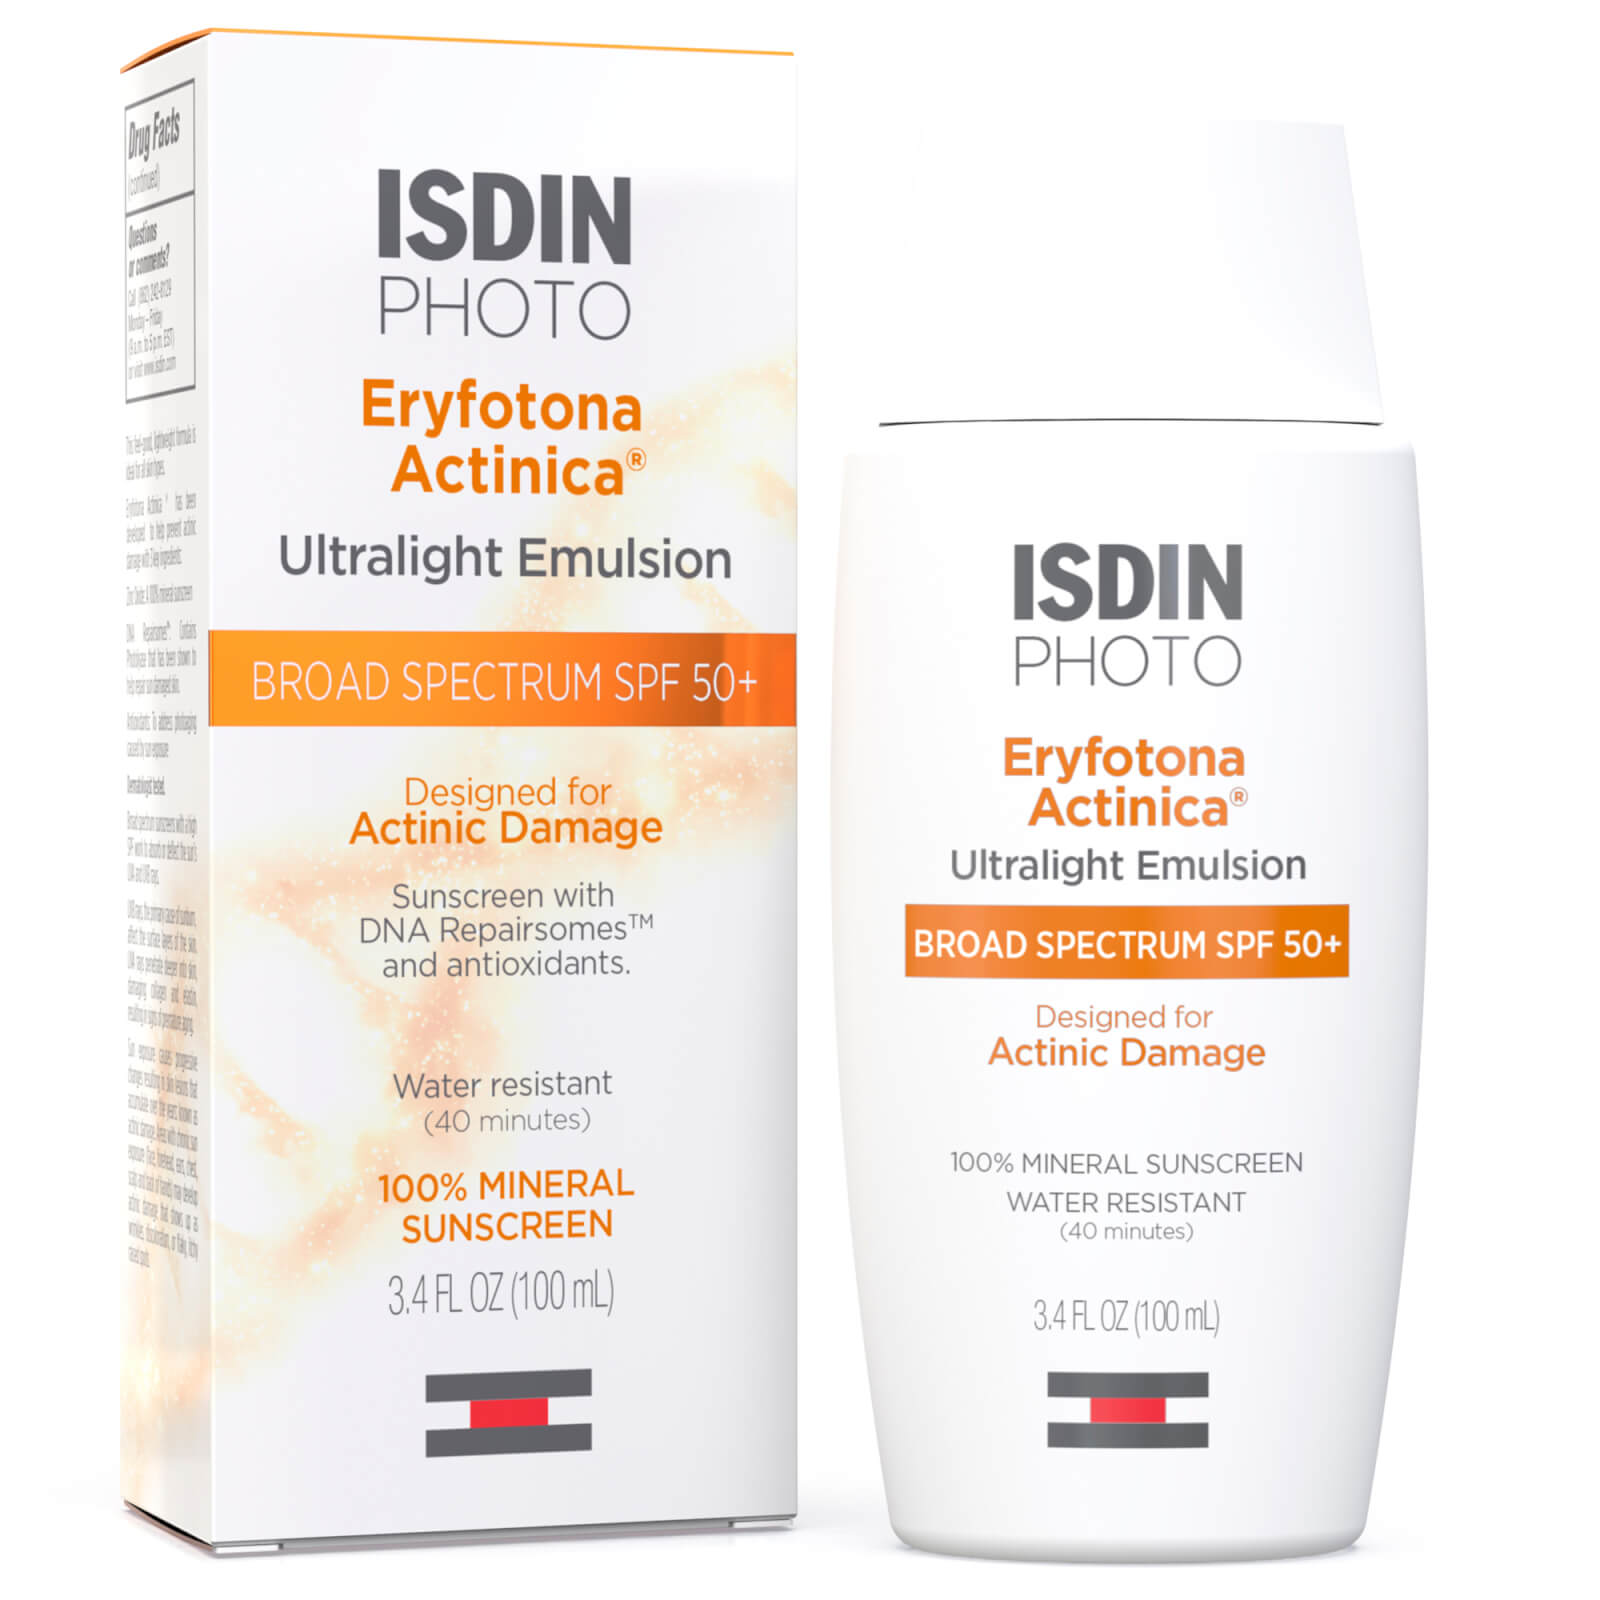 Isdin Eryfotona Actinica Daily Lightweight Mineral Spf 50+ Sunscreen 3.4 oz